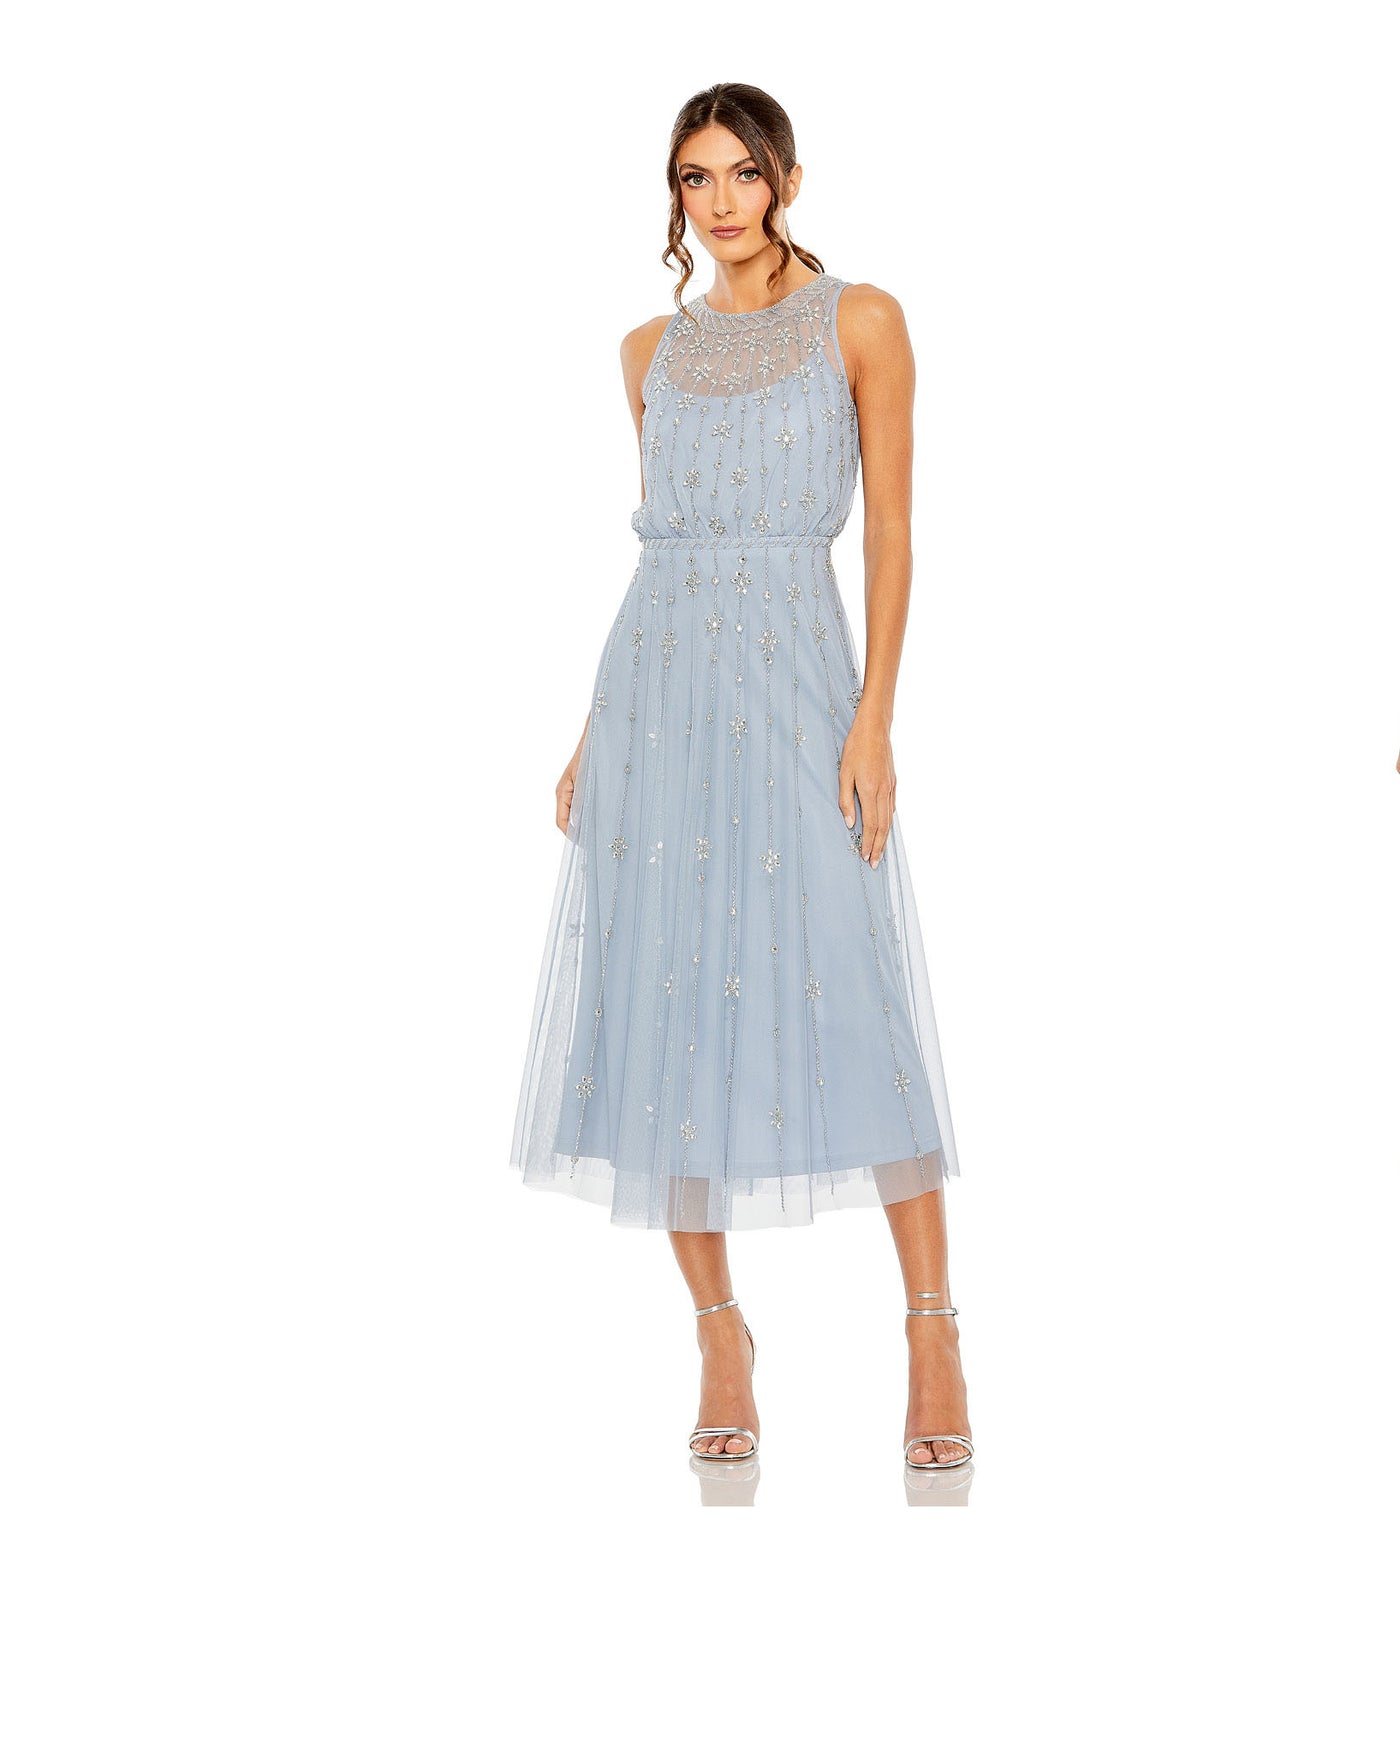 Mac Duggal 9222 B Chic Fashions Tea Length Dress Evening Gowns